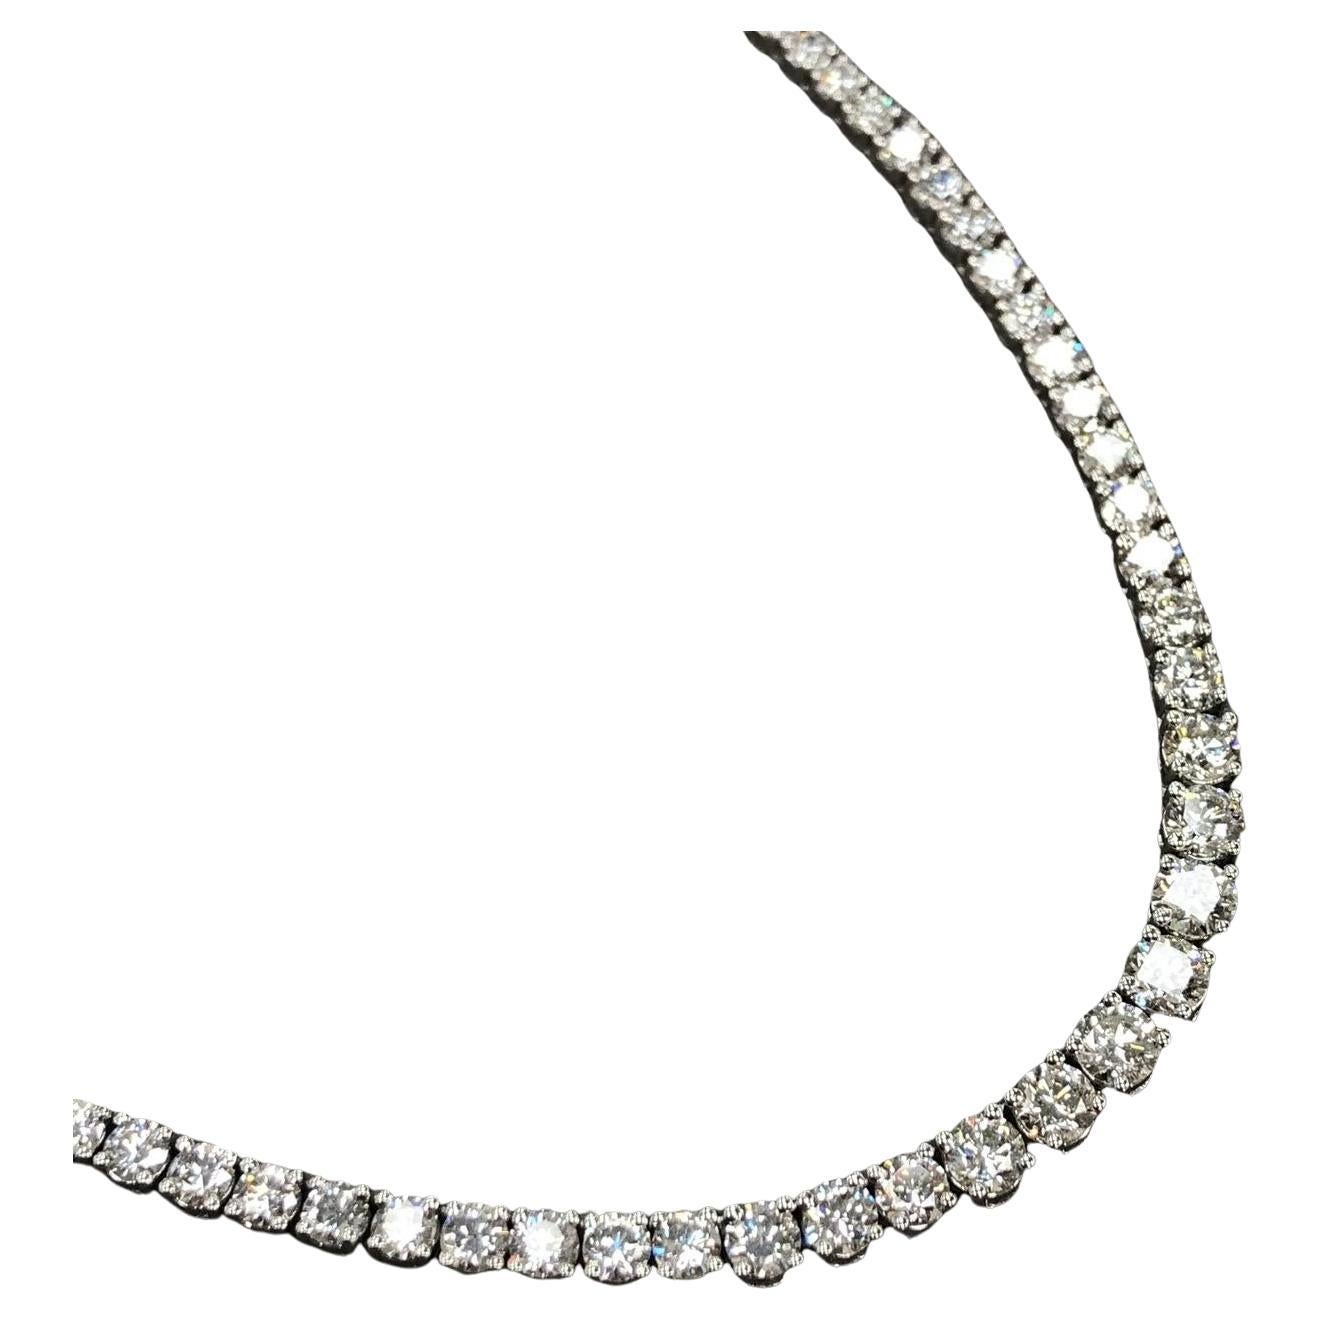 Women's or Men's 28 Carat Round Brilliant Cut Diamond Tennis Necklace Set in 18K White Gold For Sale